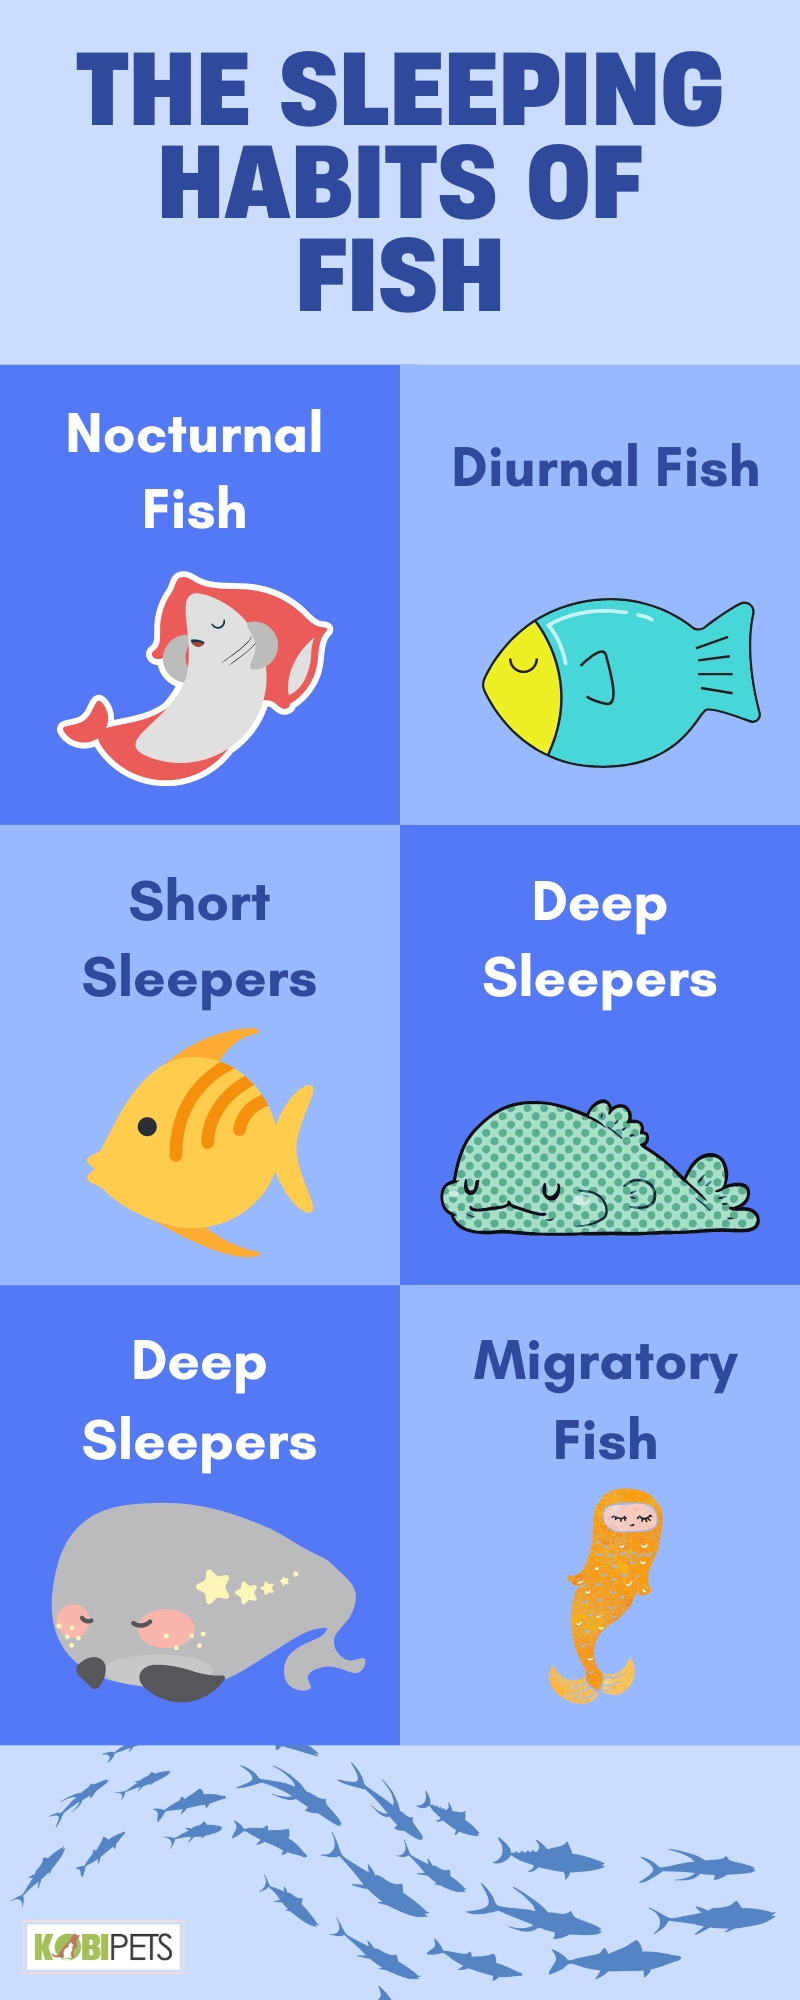 The Sleeping Habits of Fish